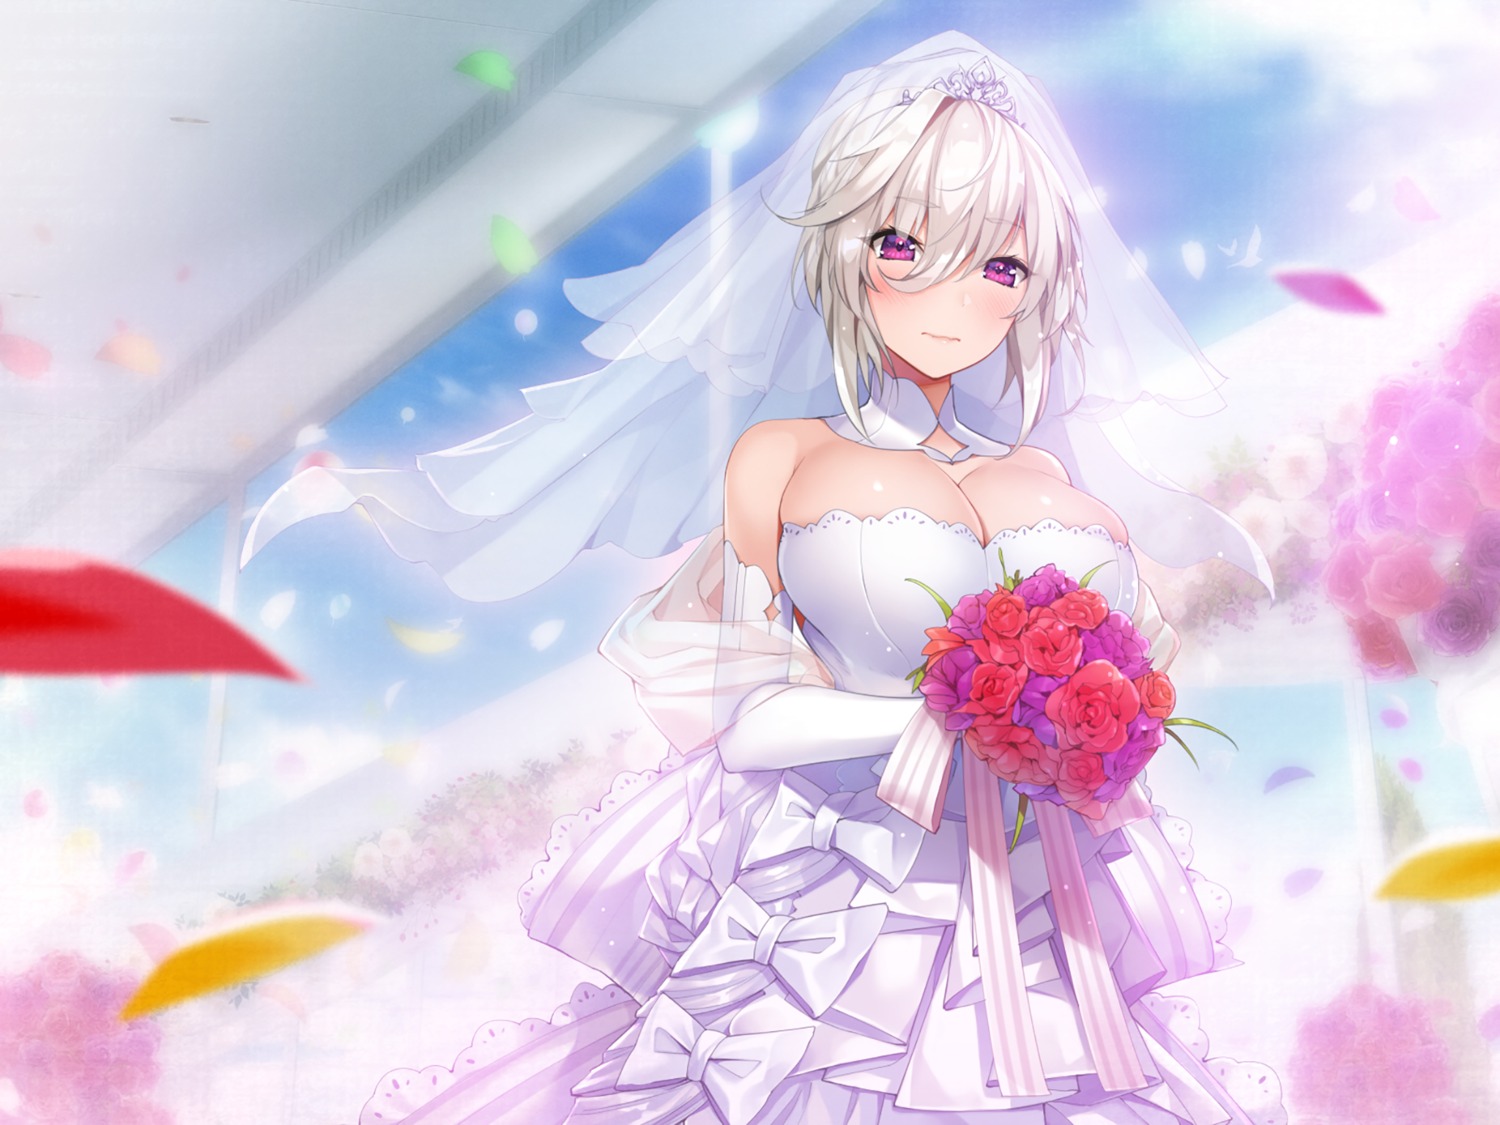 azarashi_soft cleavage dress eve_(maid-san_no_iru_kurashi) game_cg maid-san_no_iru_kurashi wedding_dress yaman